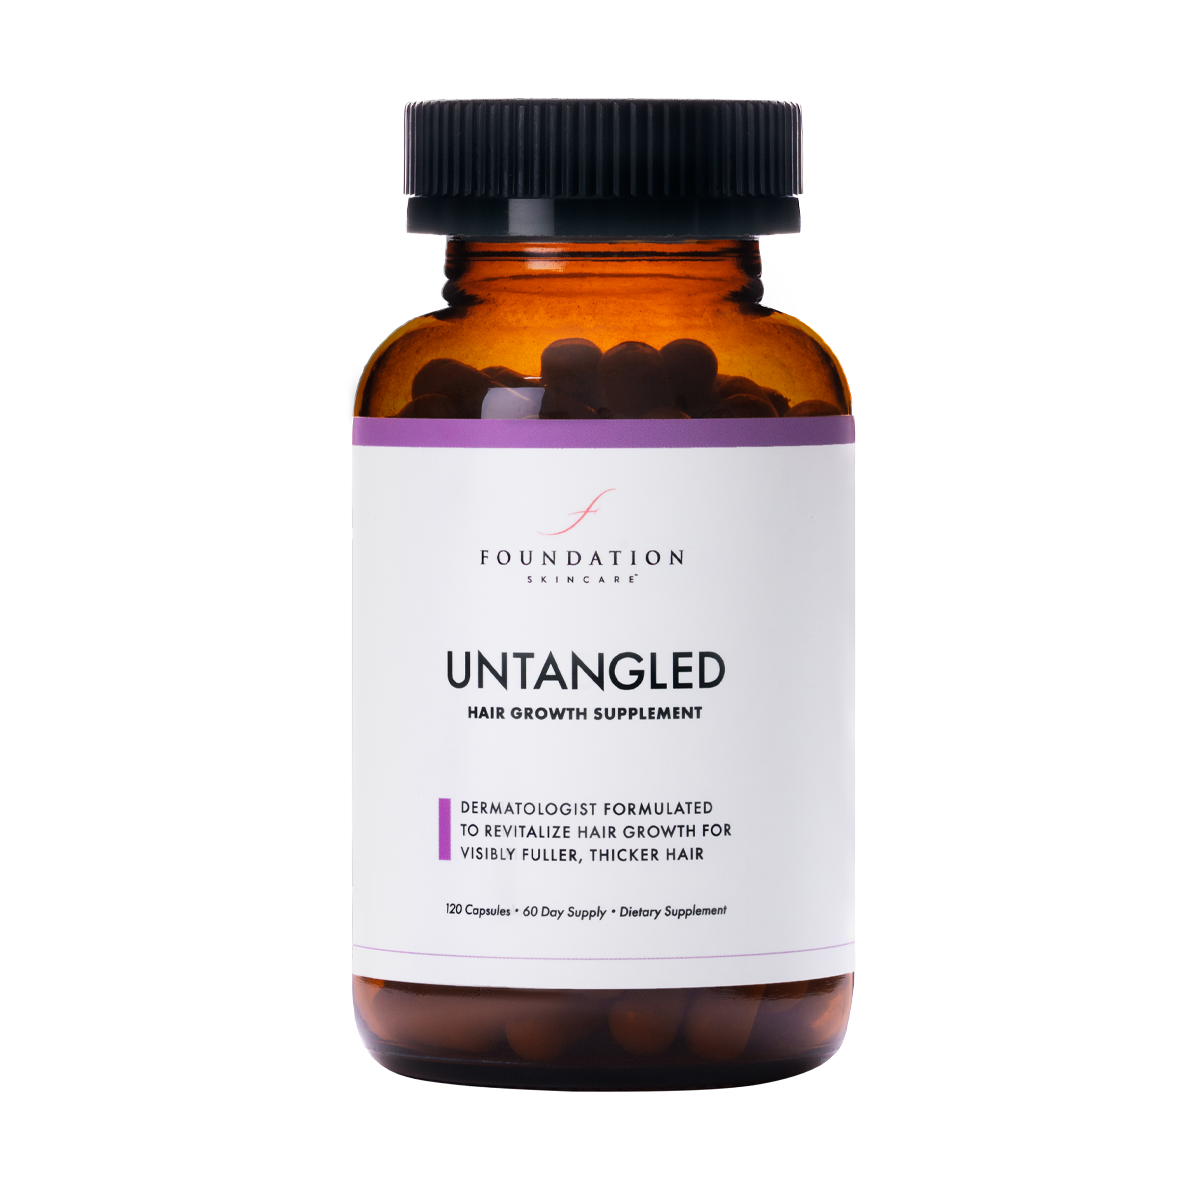 UnTangled Hair Supplement